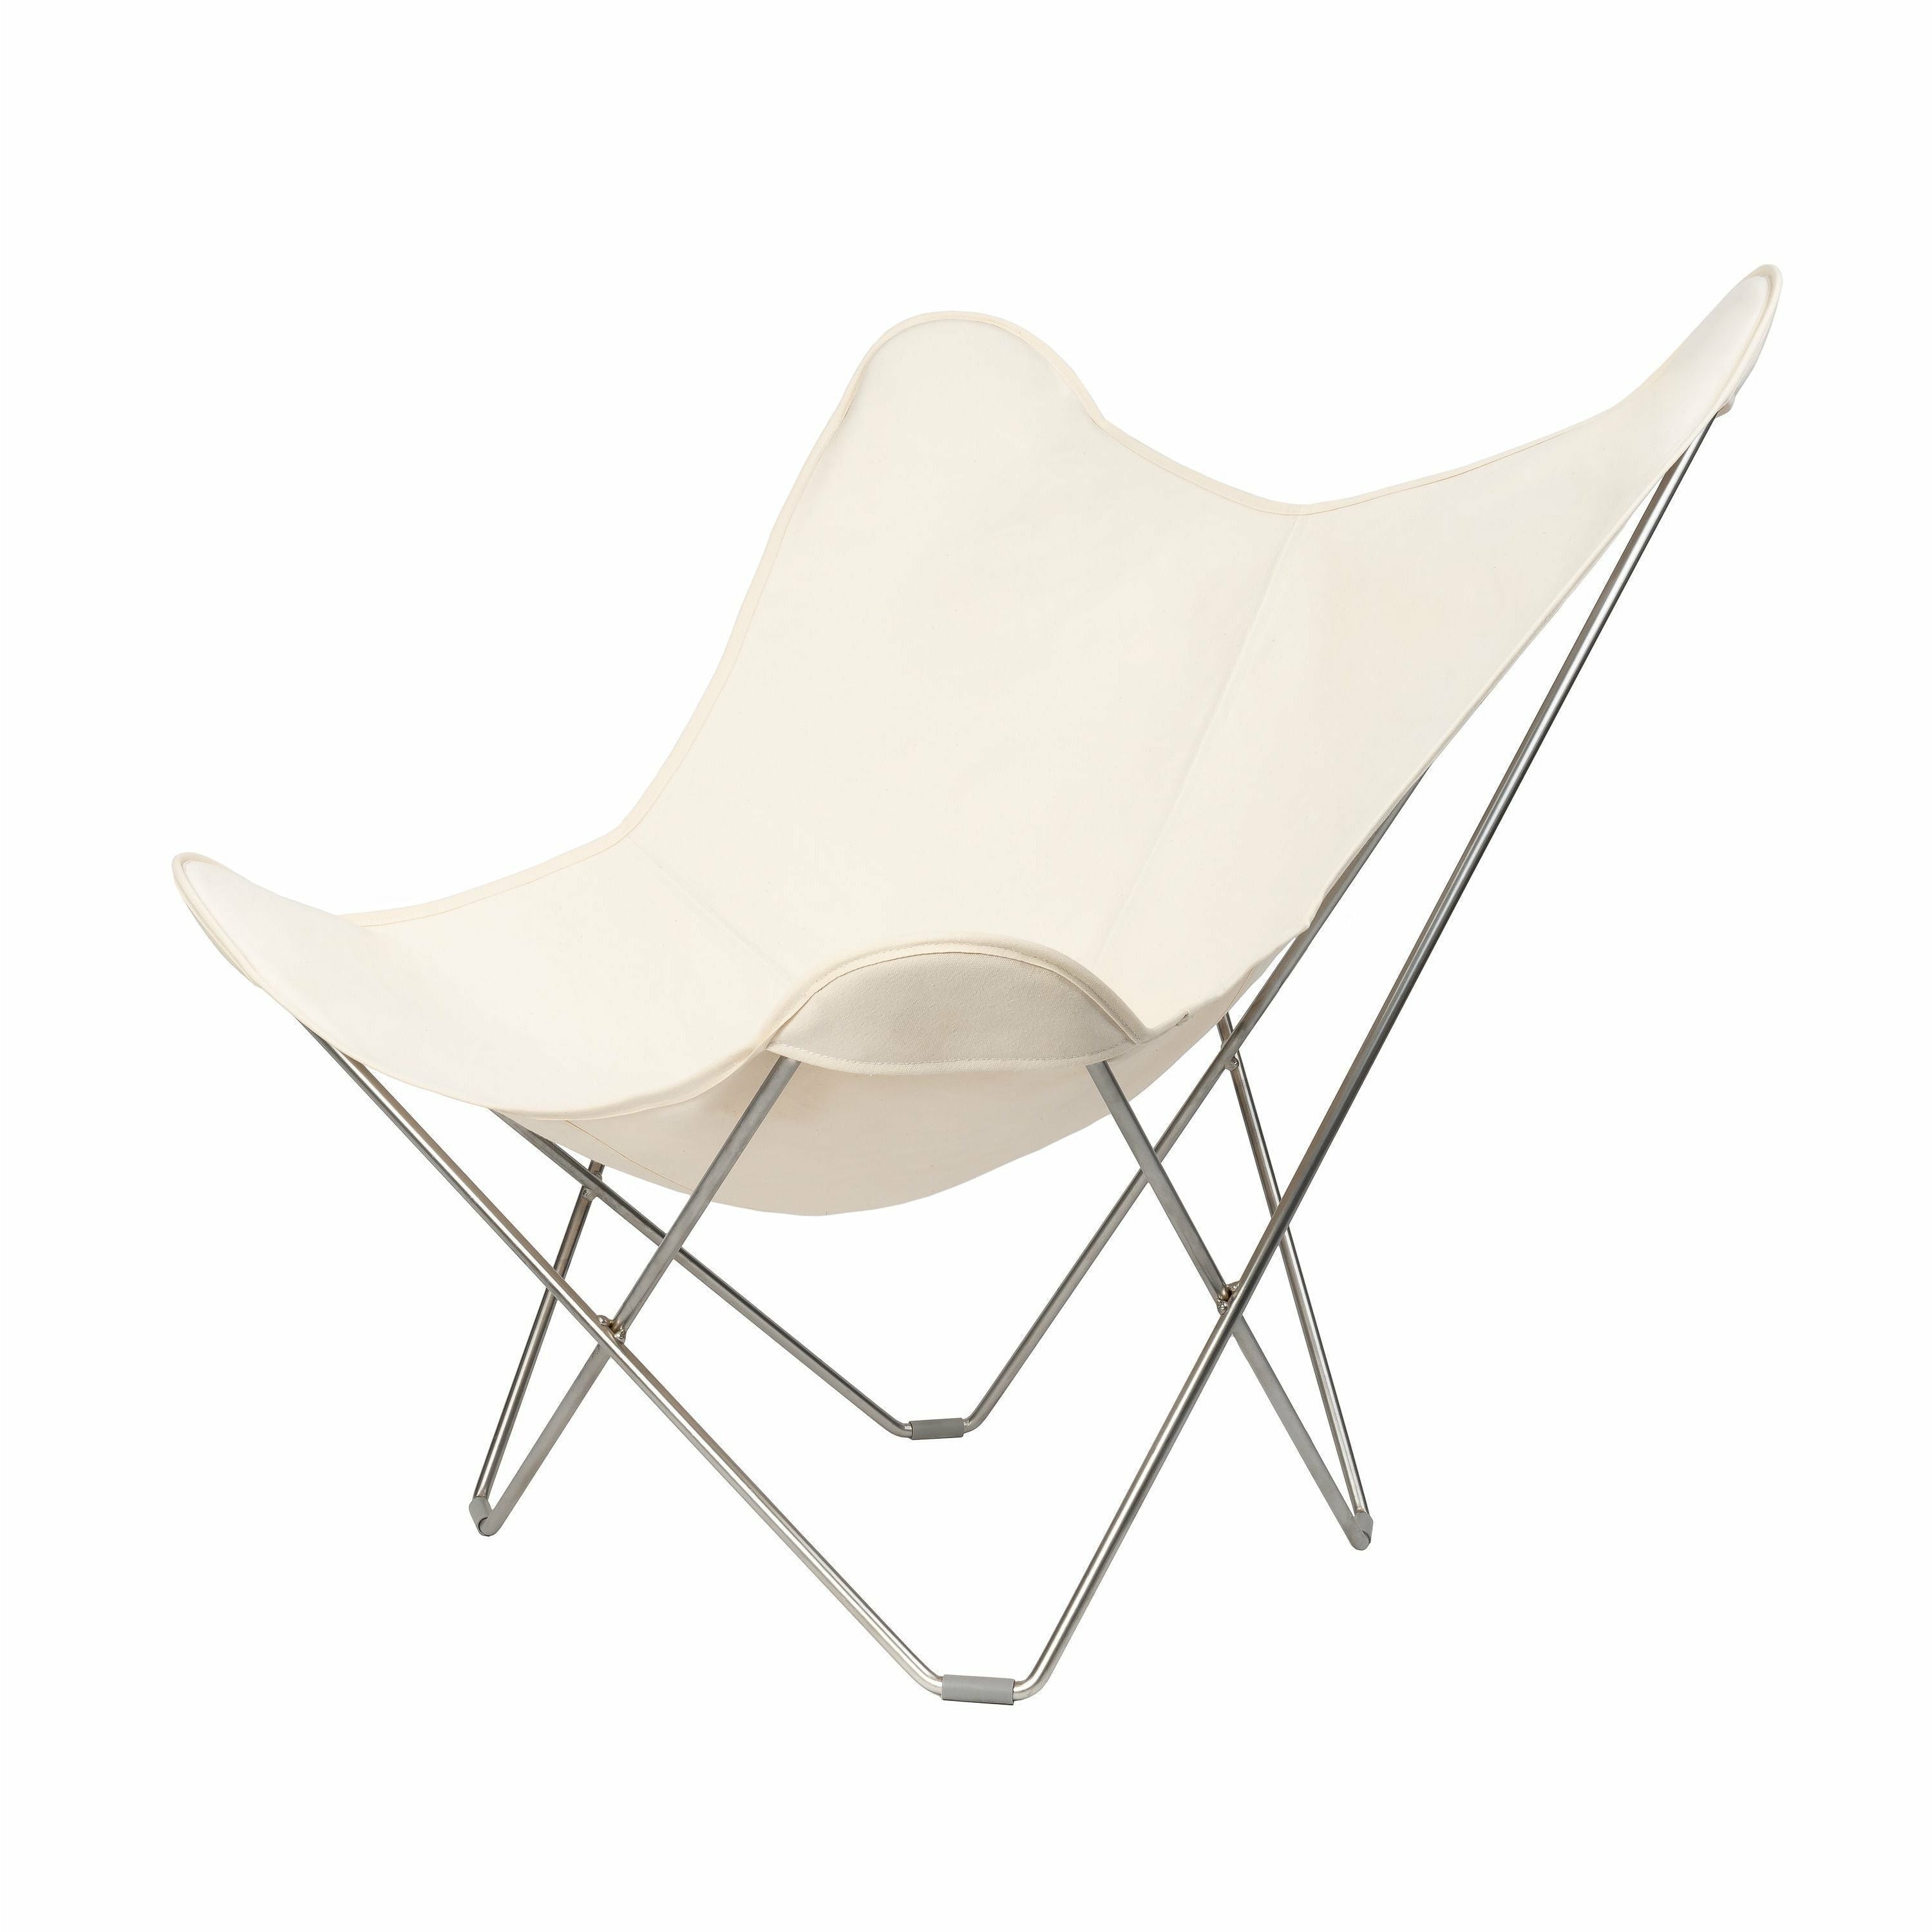 Cuero Bomull Canvas Mariposa Chair, White With Chrome Frame